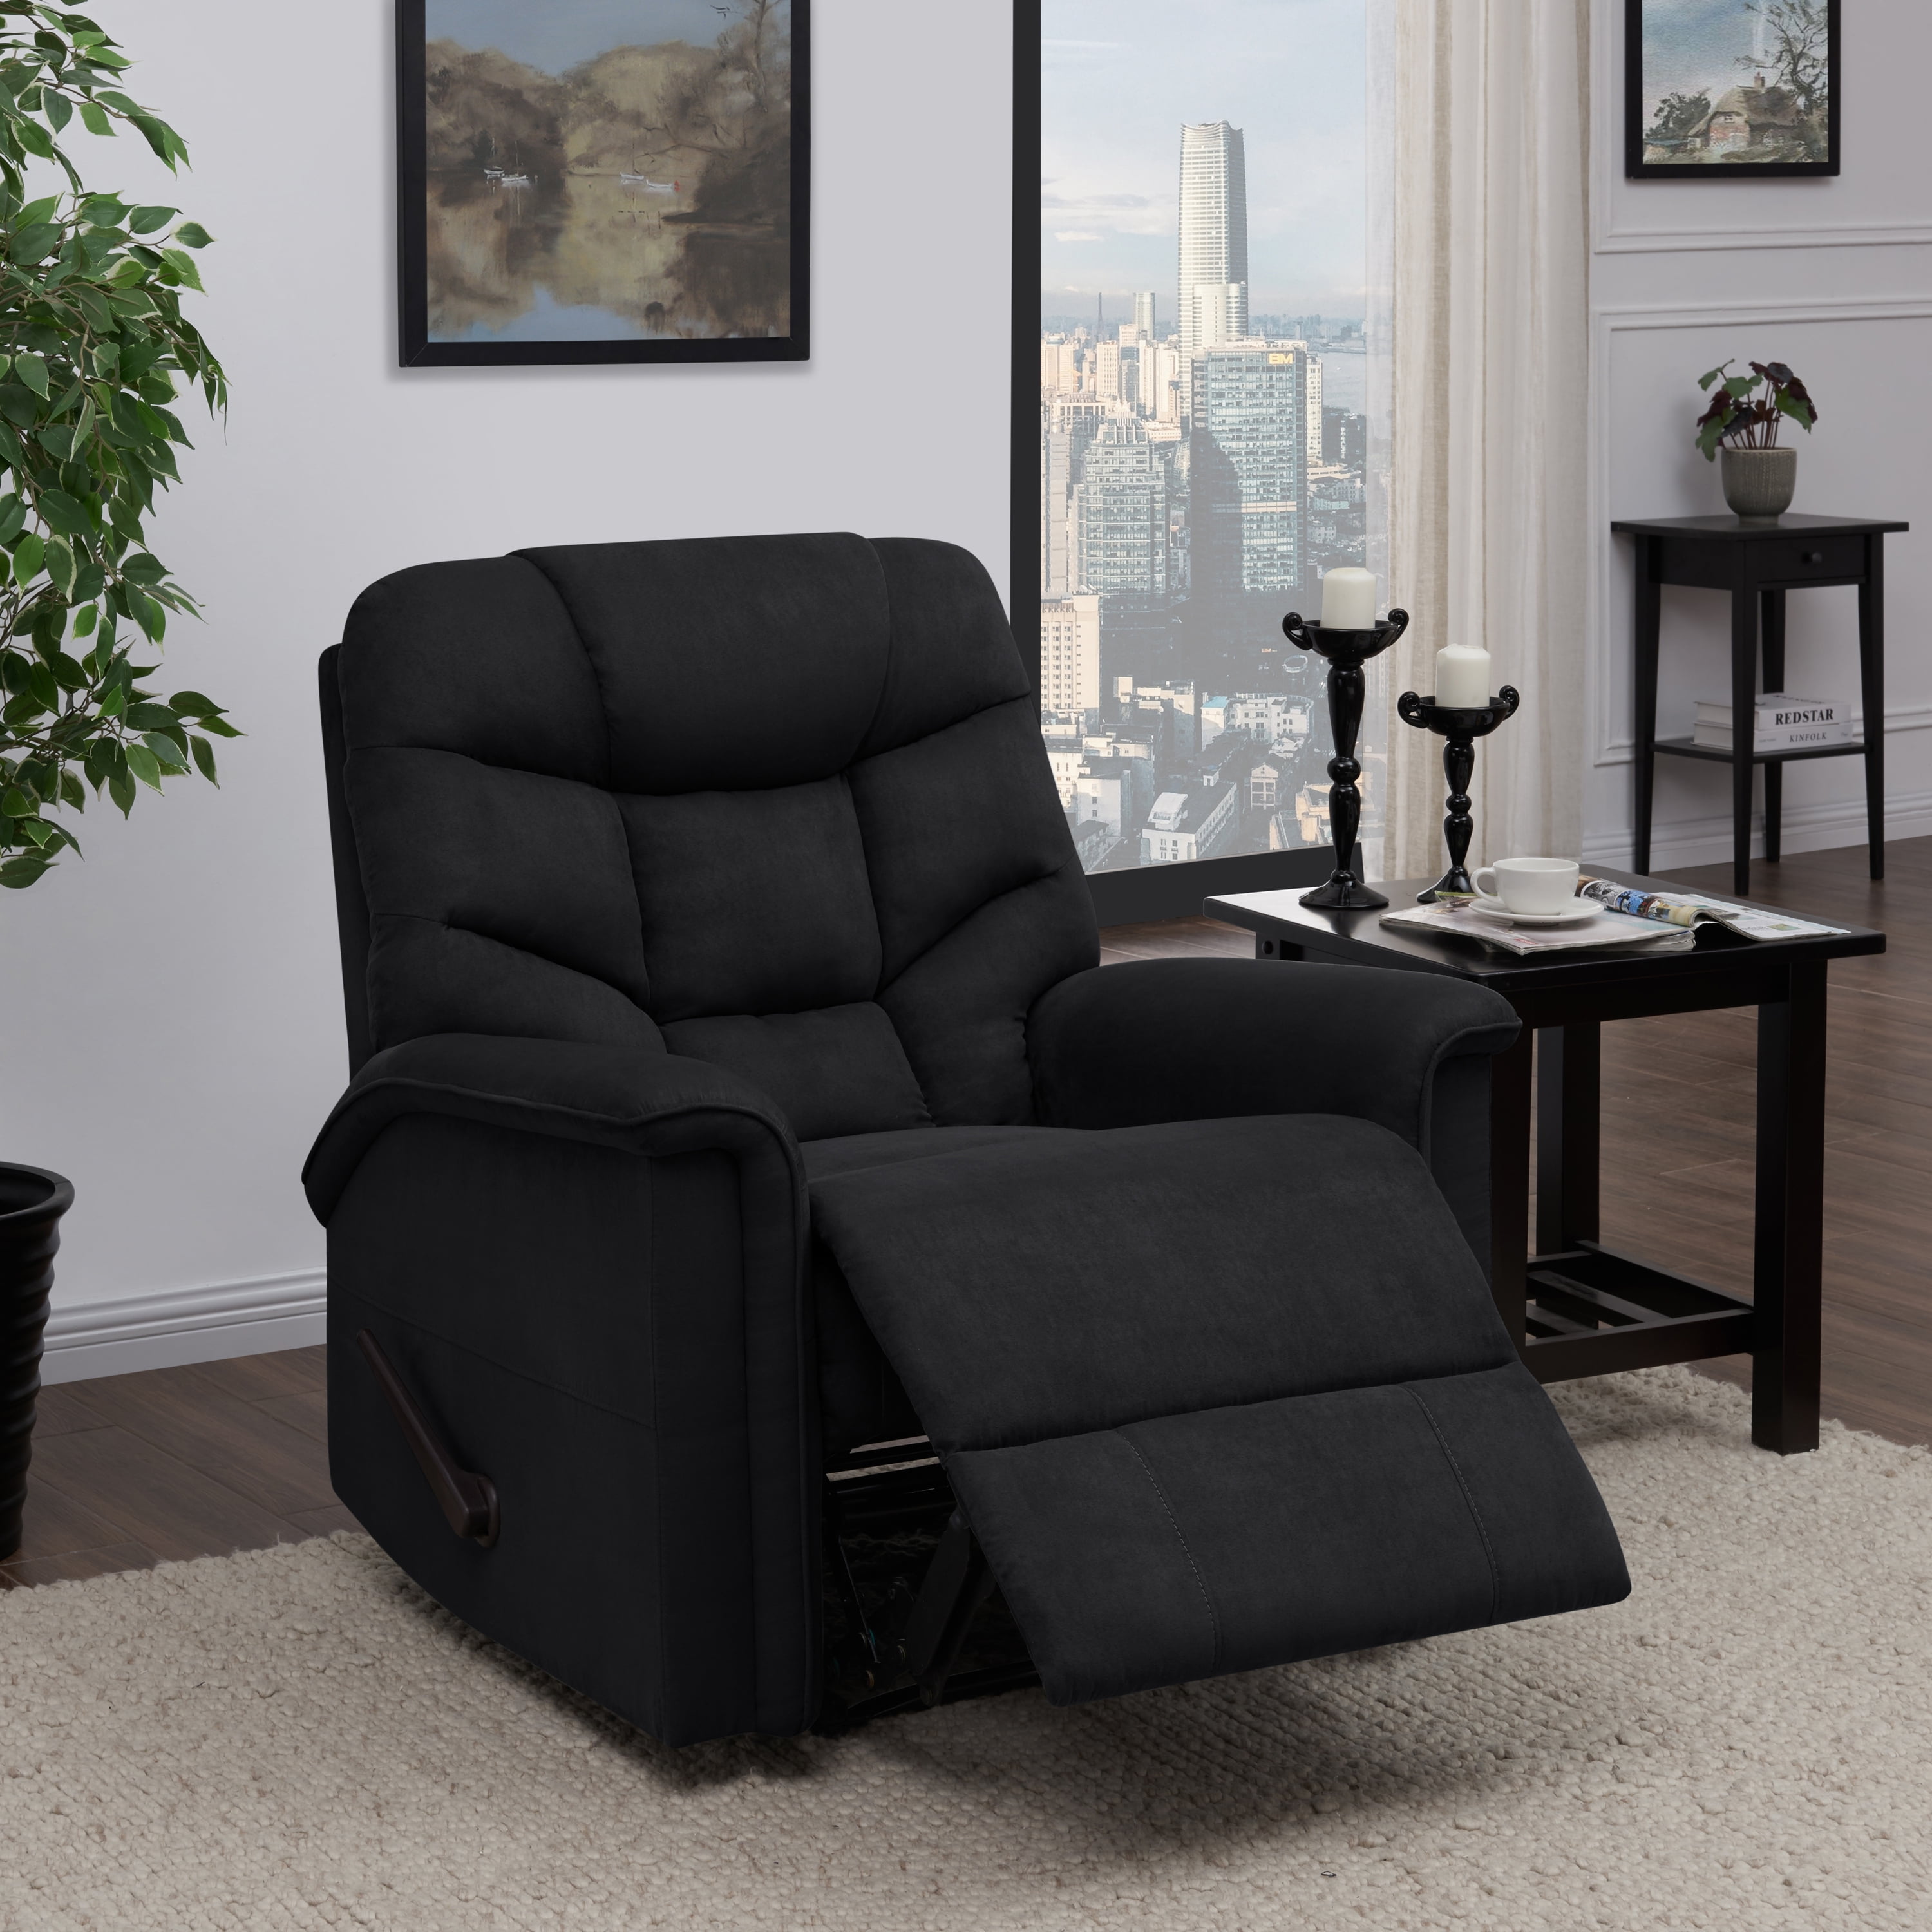 Homesvale Wall Hugger Recliner Chair Black Microfiber 68 Reclined